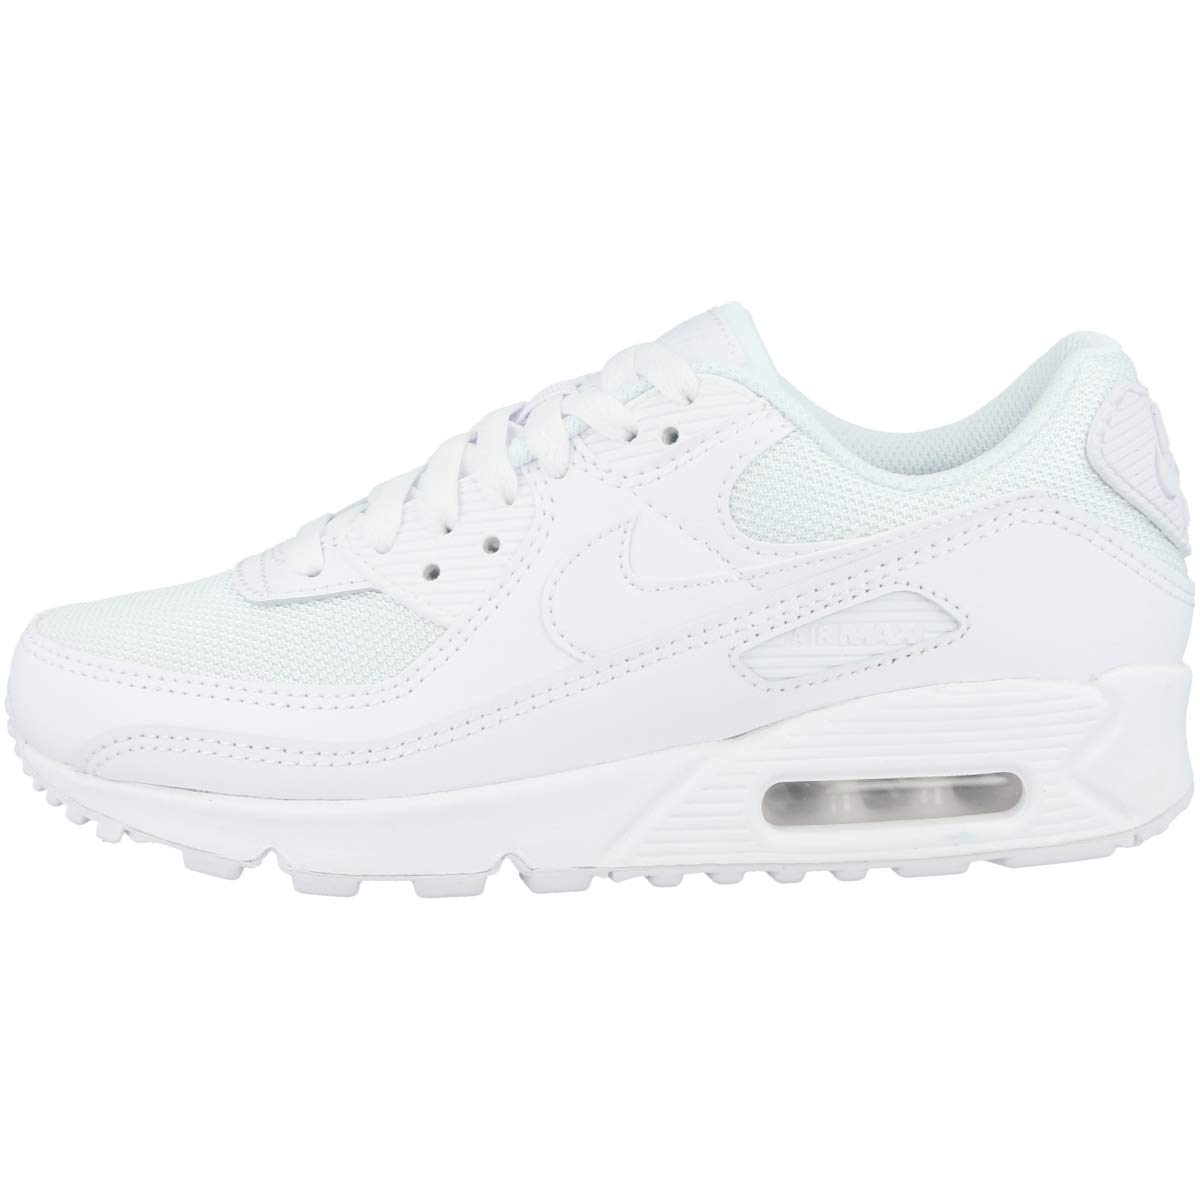 Nike Damen Air Max 90 Sneakers, Weiß White White White Wolf Grey, 36.5 EU